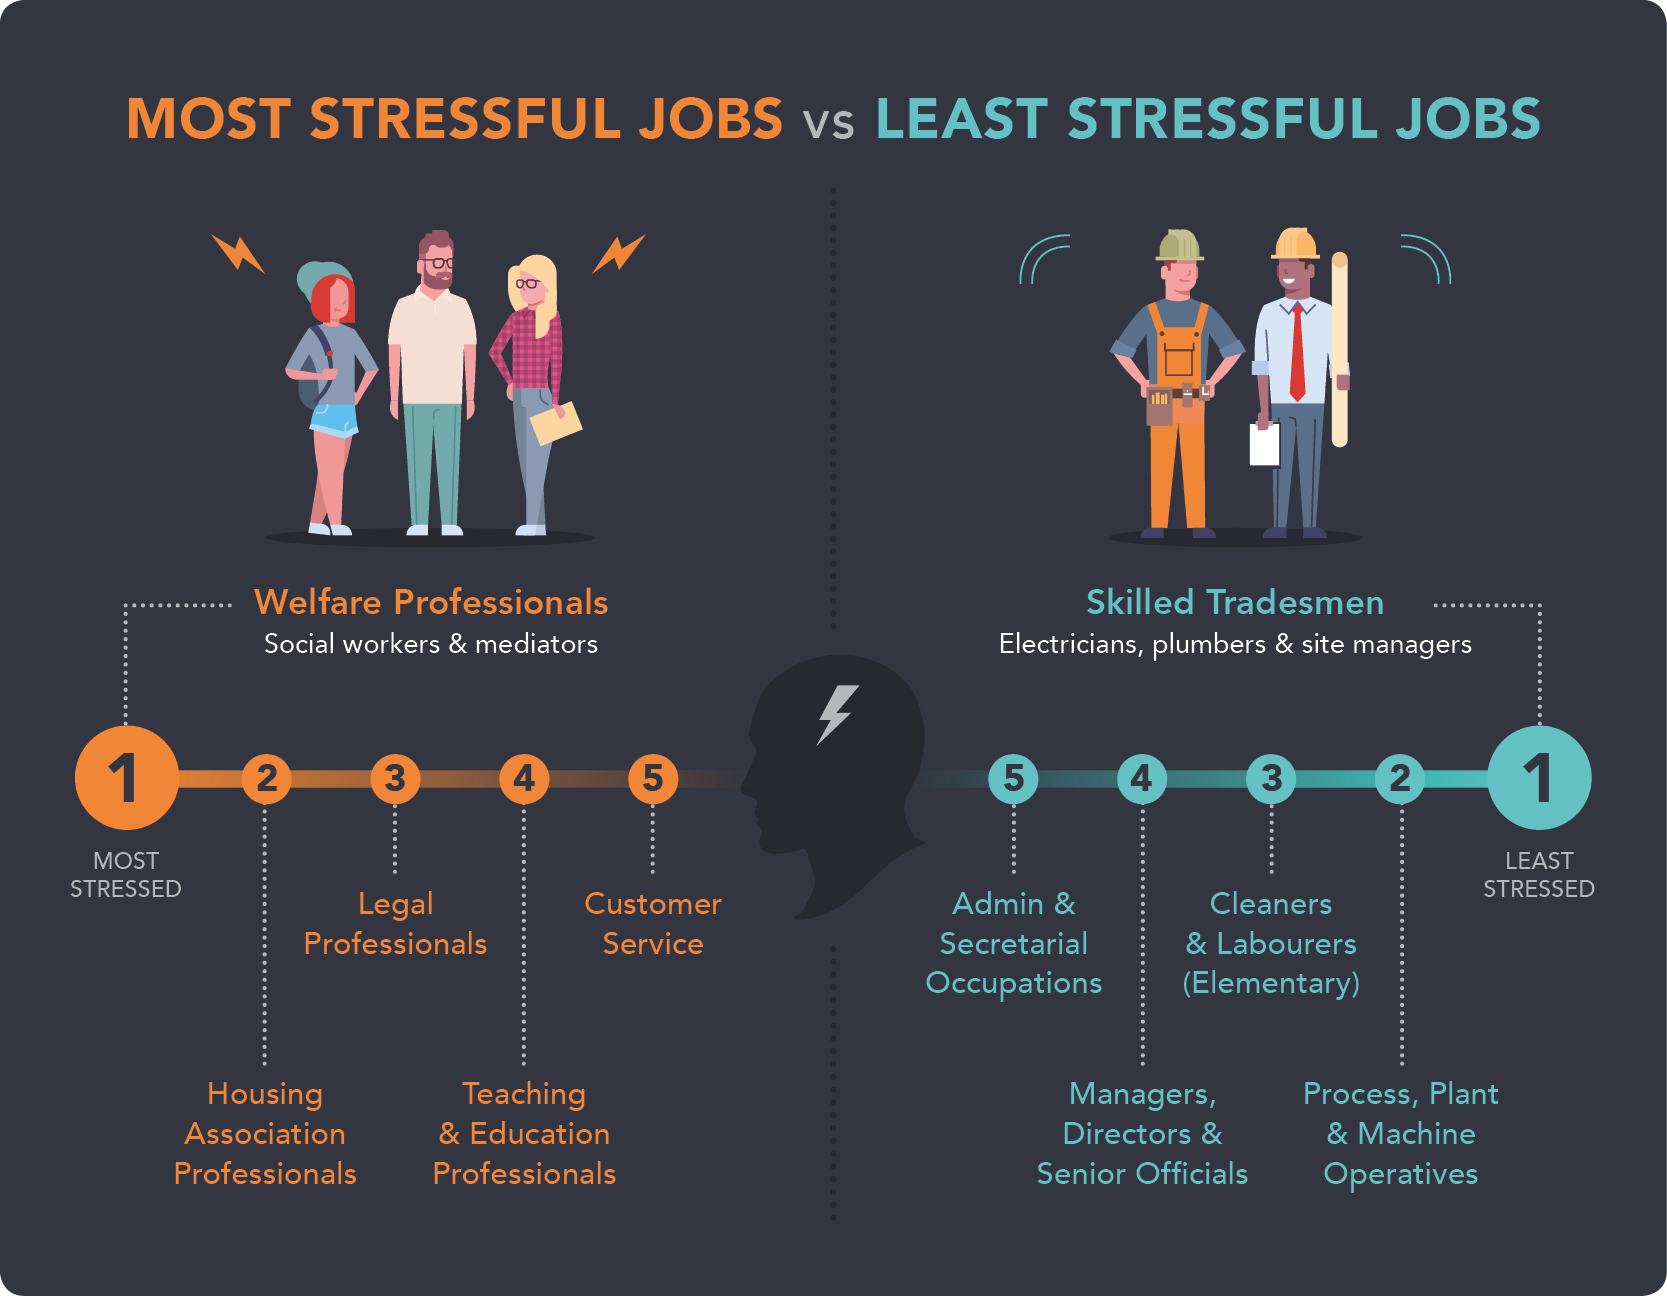 Professionals vs Tradesmen: has the most stressful jobs?